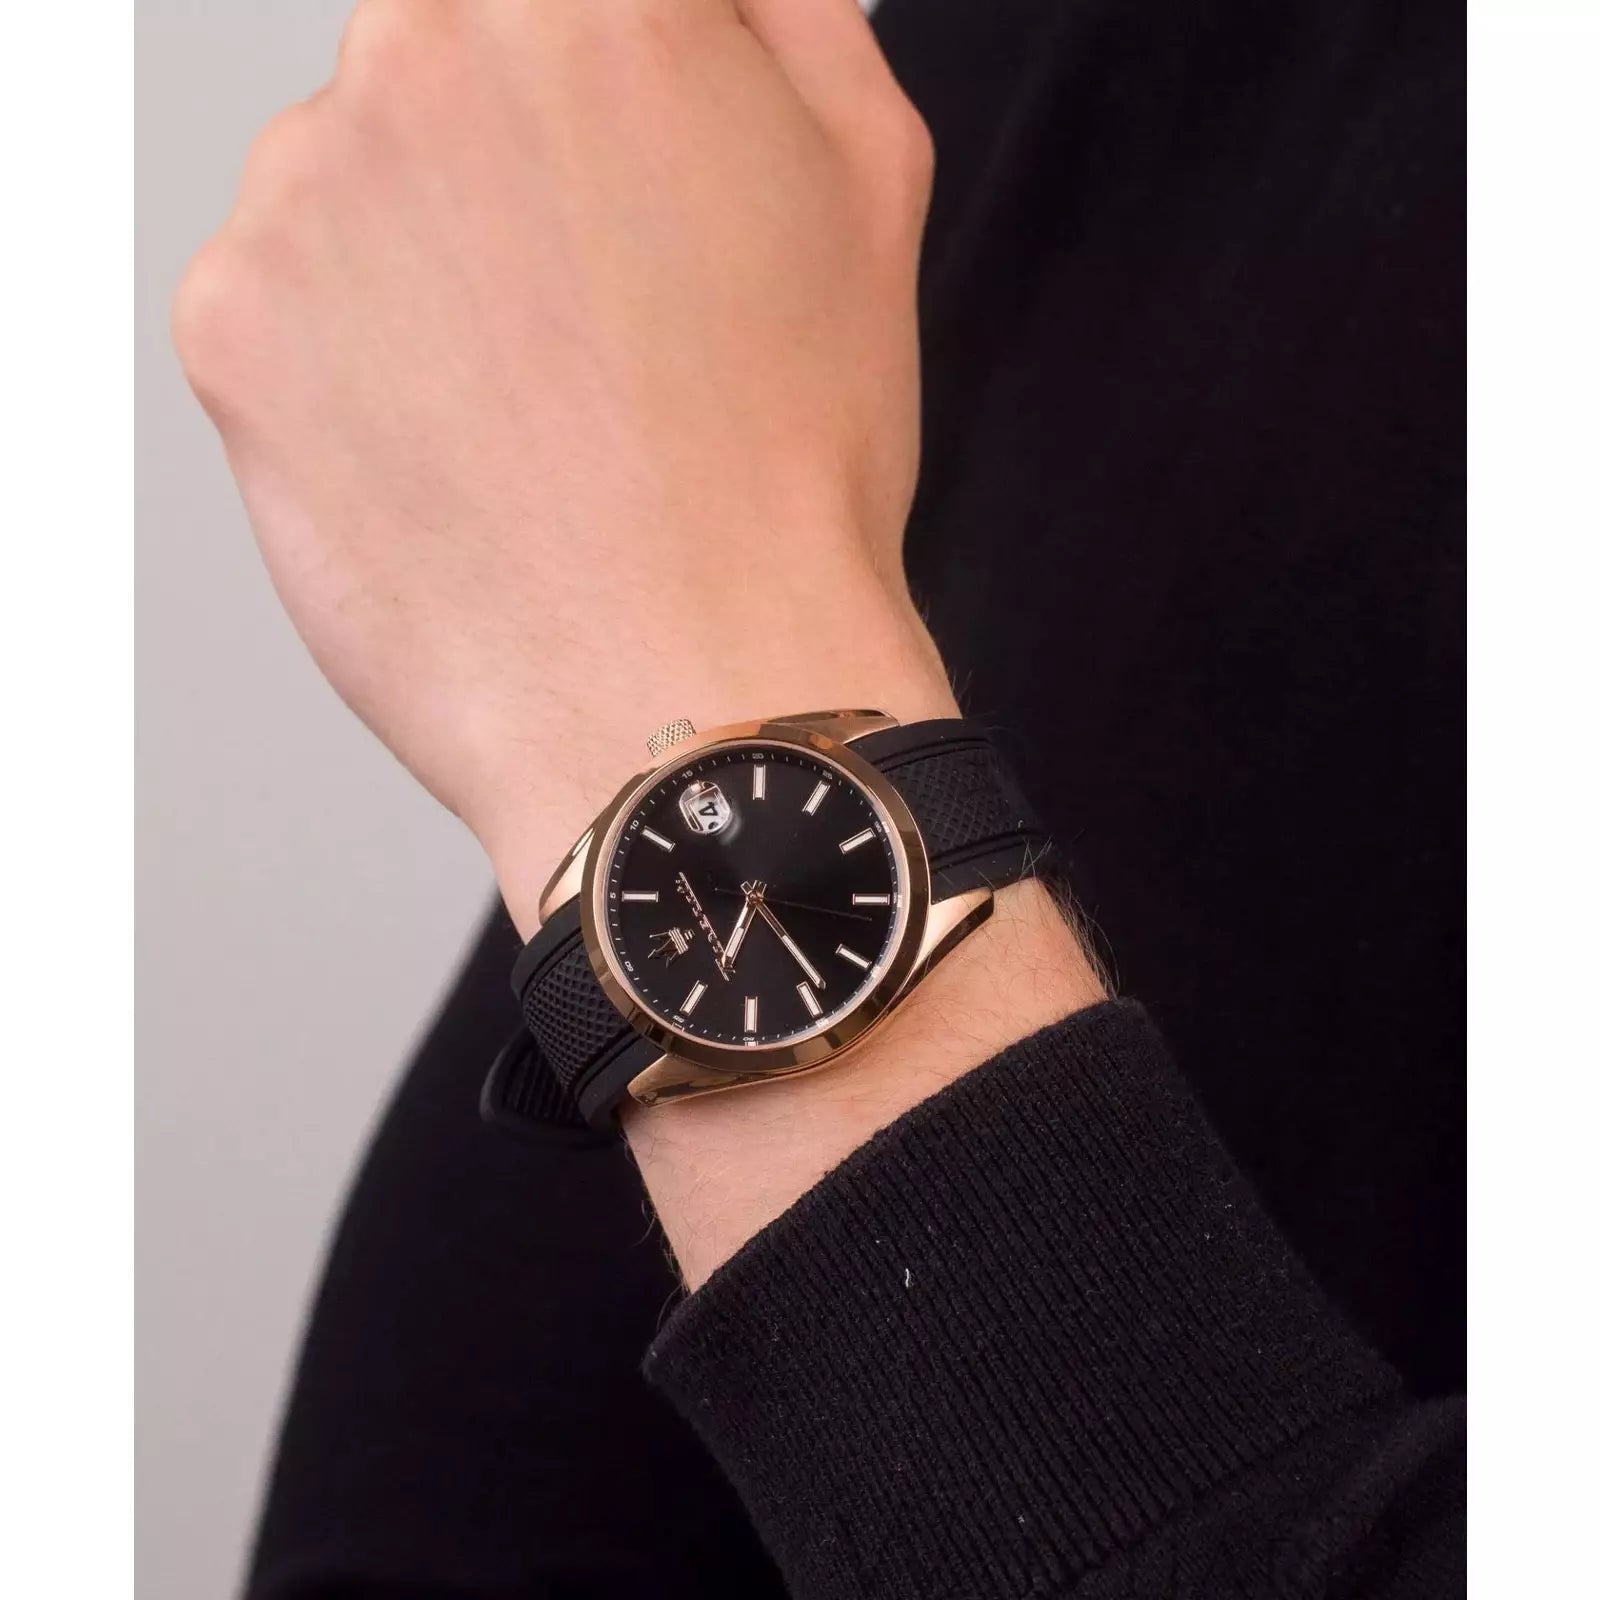 Men's Attrazione watch (R8851151002)